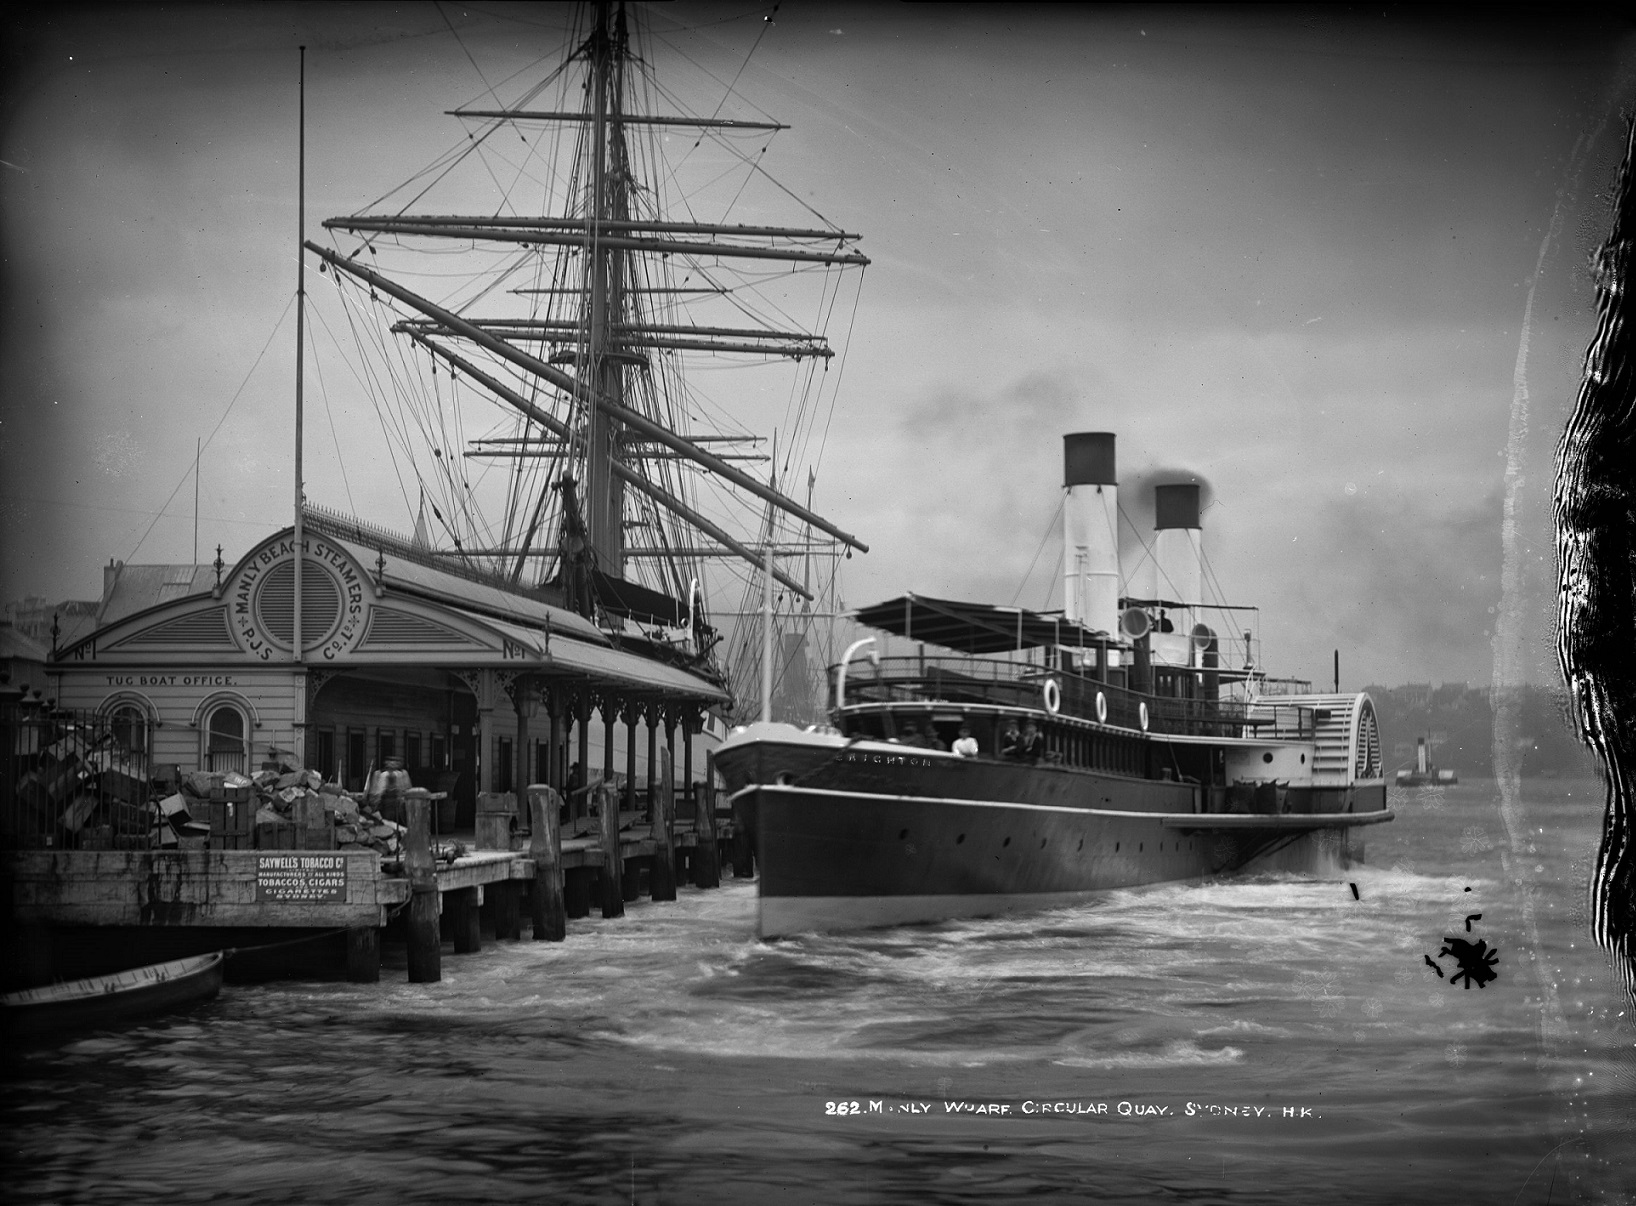 SS Brighton at Manly Wharf Circular Quay circa 1890.jpg